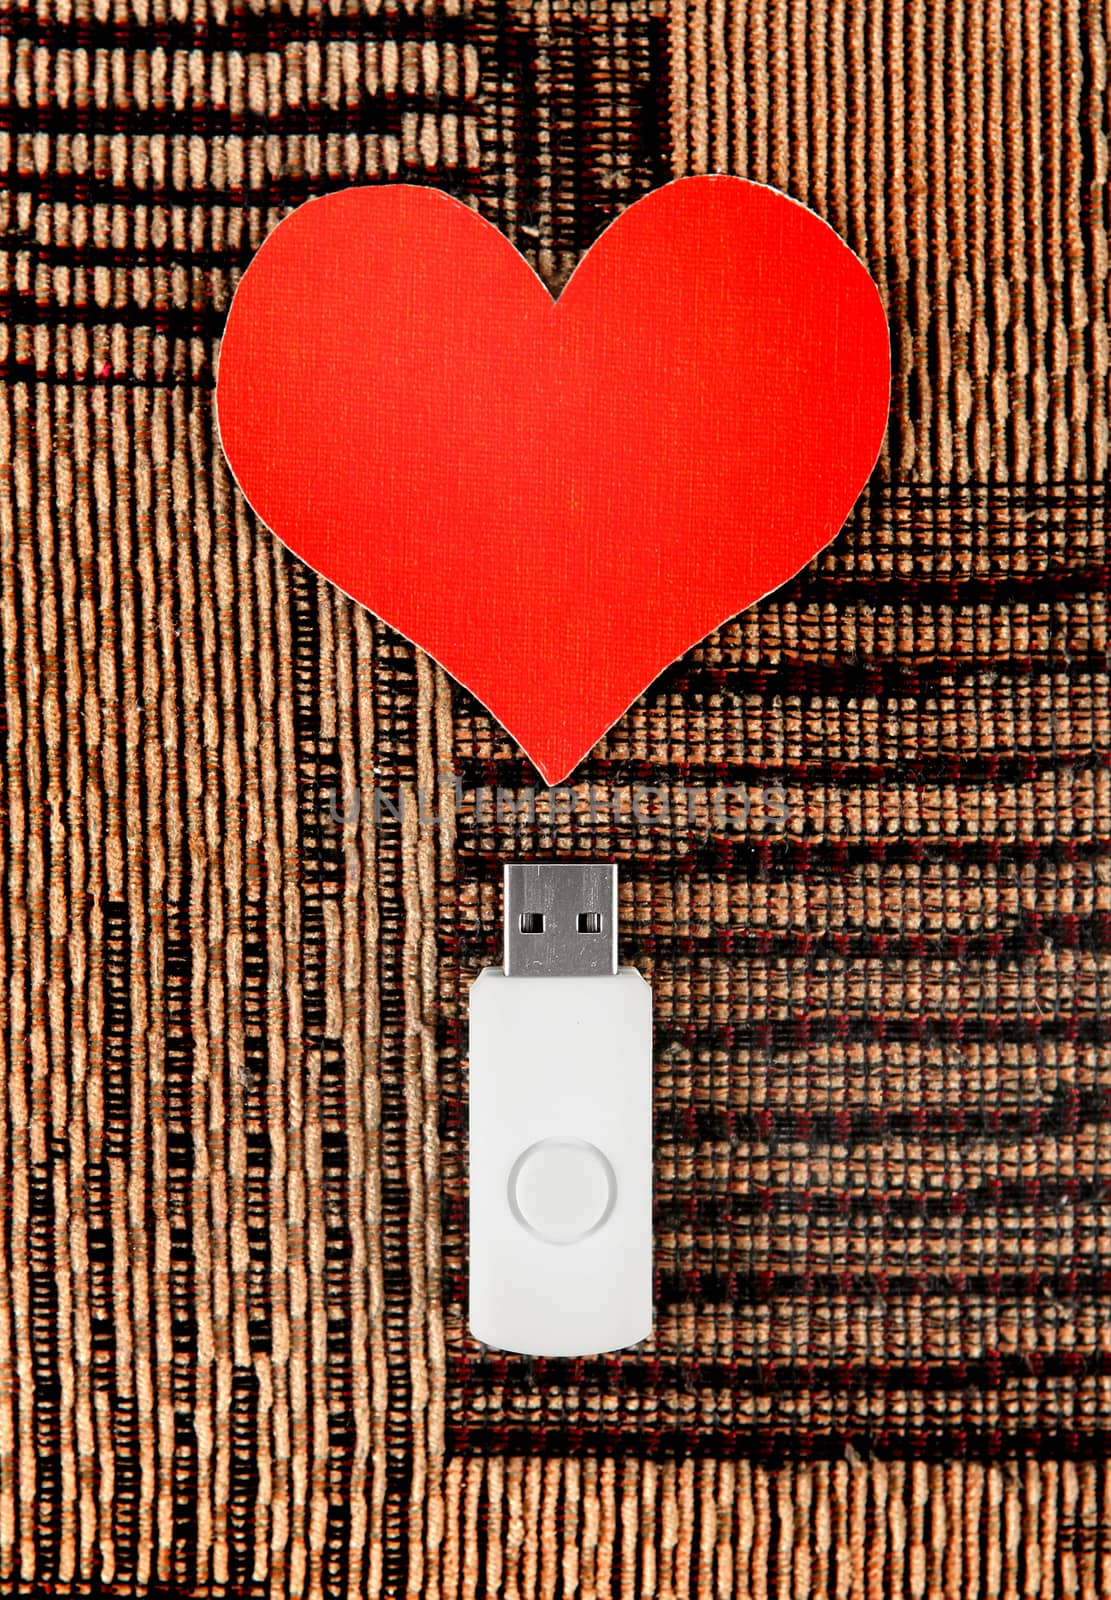 USB Flash Drive with Heart Shape by sabphoto